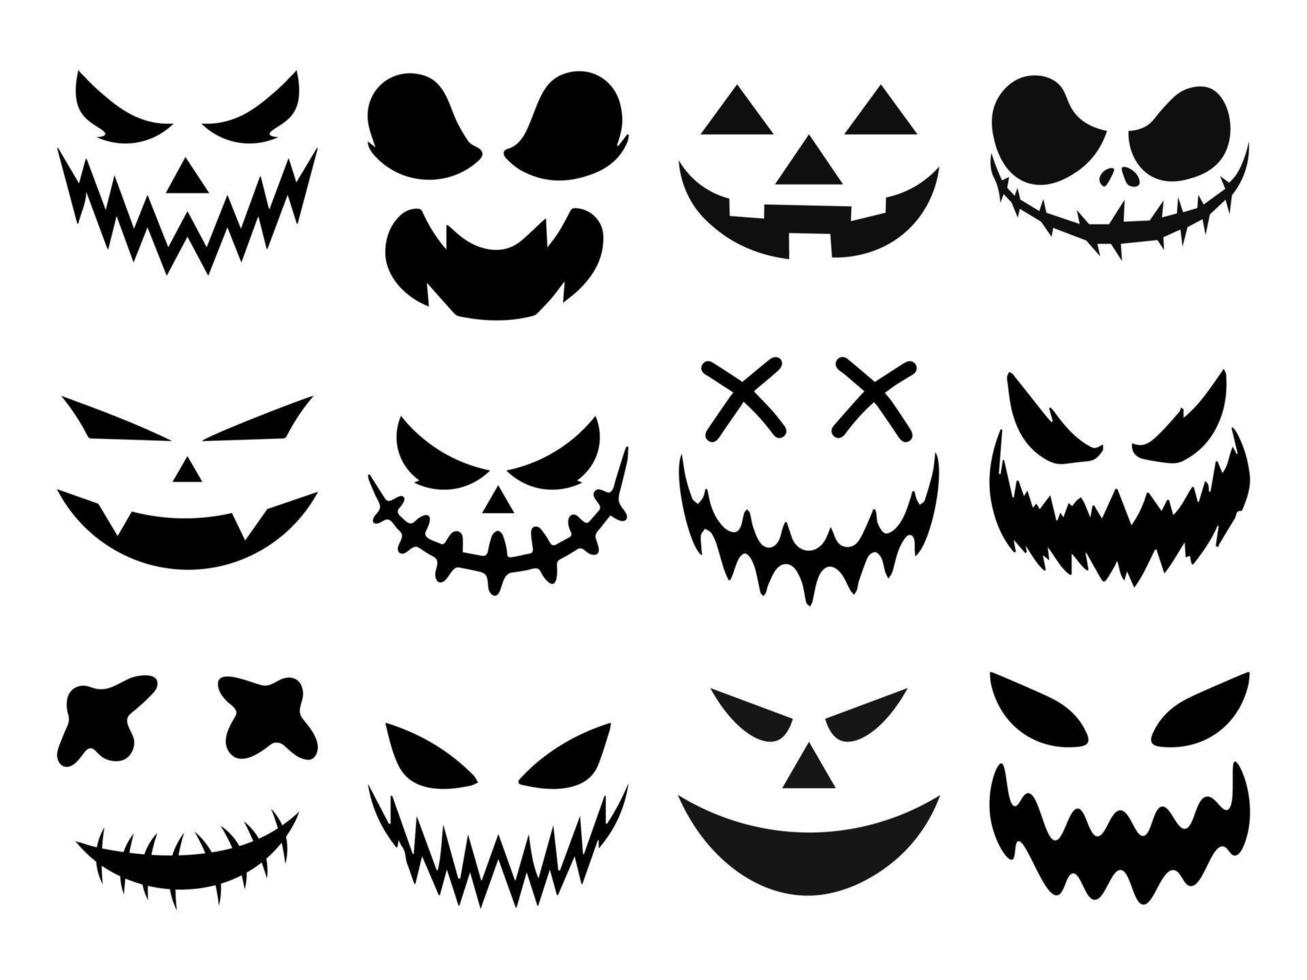 conjunto de caras de calabaza o fantasma de halloween de miedo. ilustración vectorial vector